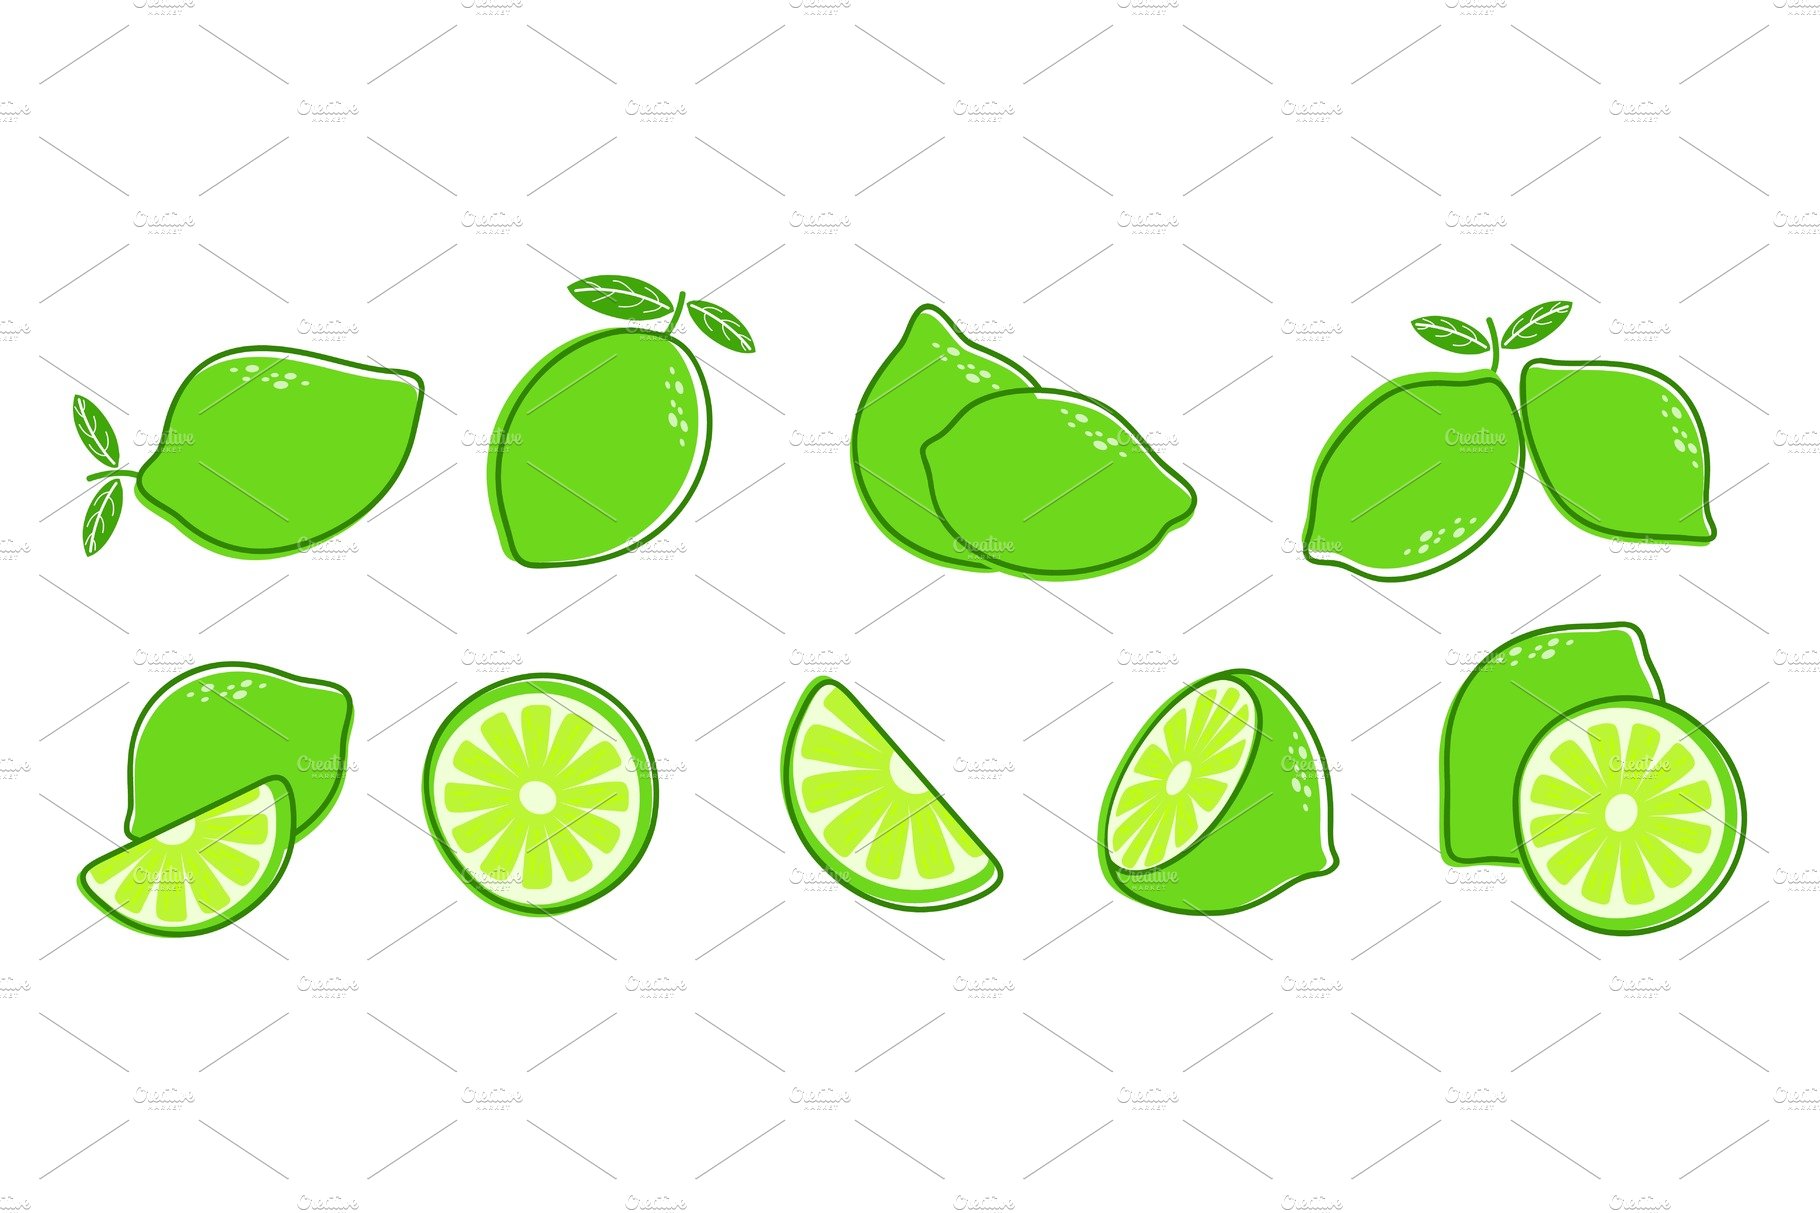 Cut lime. Fresh citrus fruit, slice cover image.